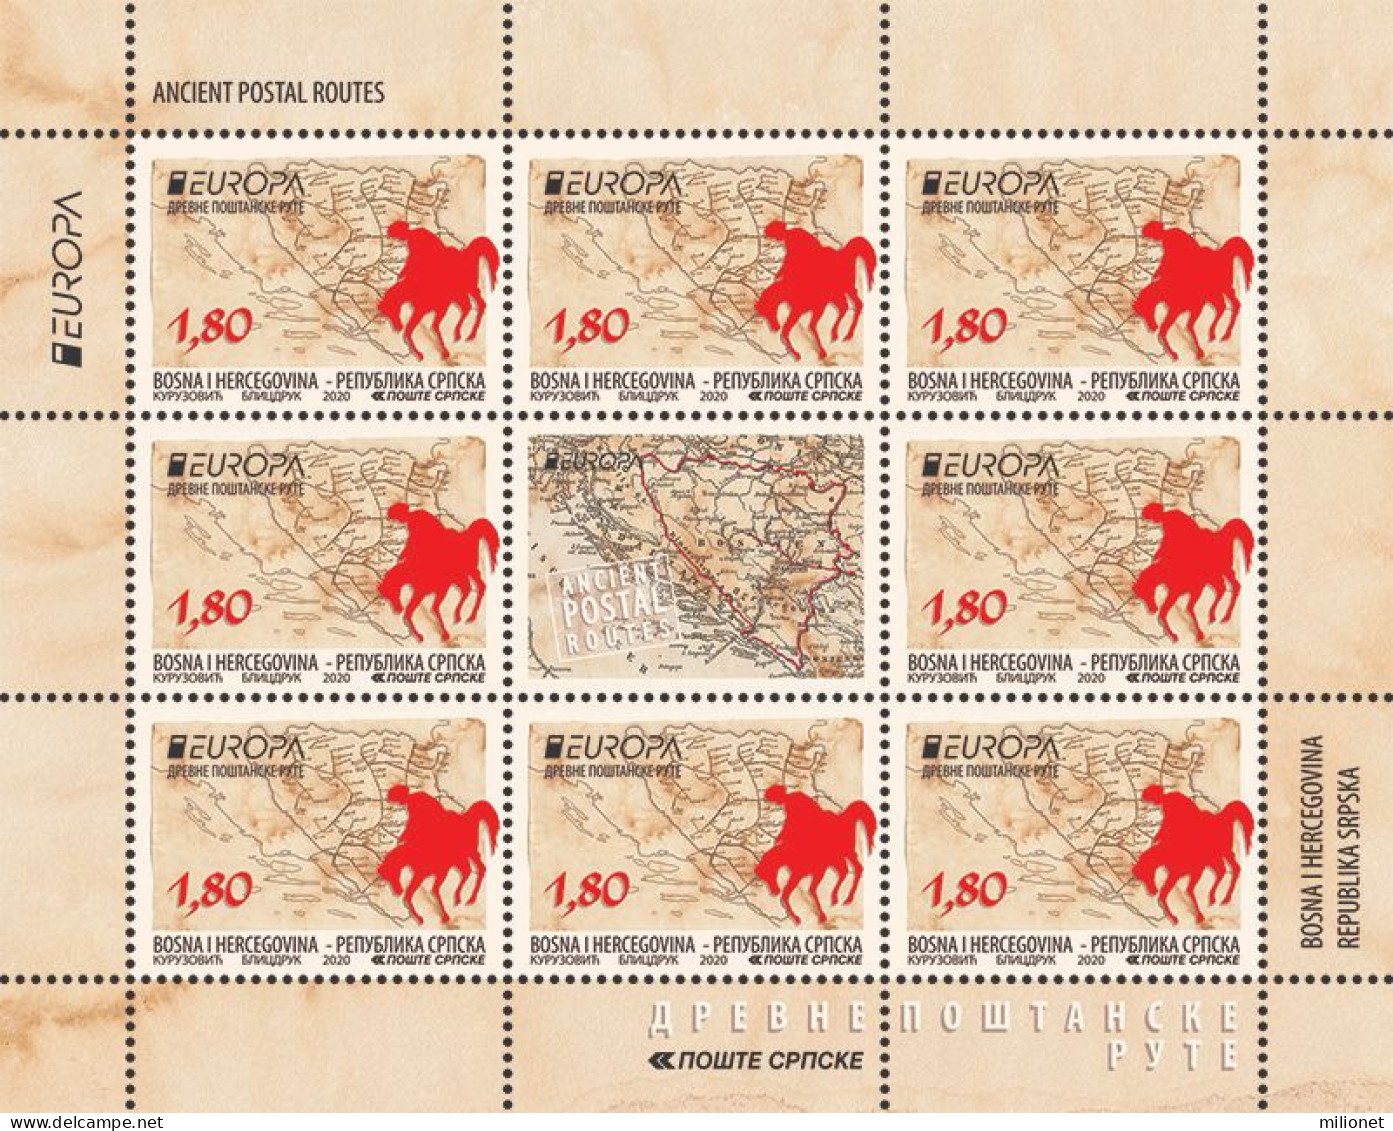 SALE!!! BOSNIA HERZEGOVINA SERBIA SERB POST PALE BOSNIE BOSNIEN 2020 EUROPA CEPT Ancient Postal Routes 2 Sheetlets ** - 2020